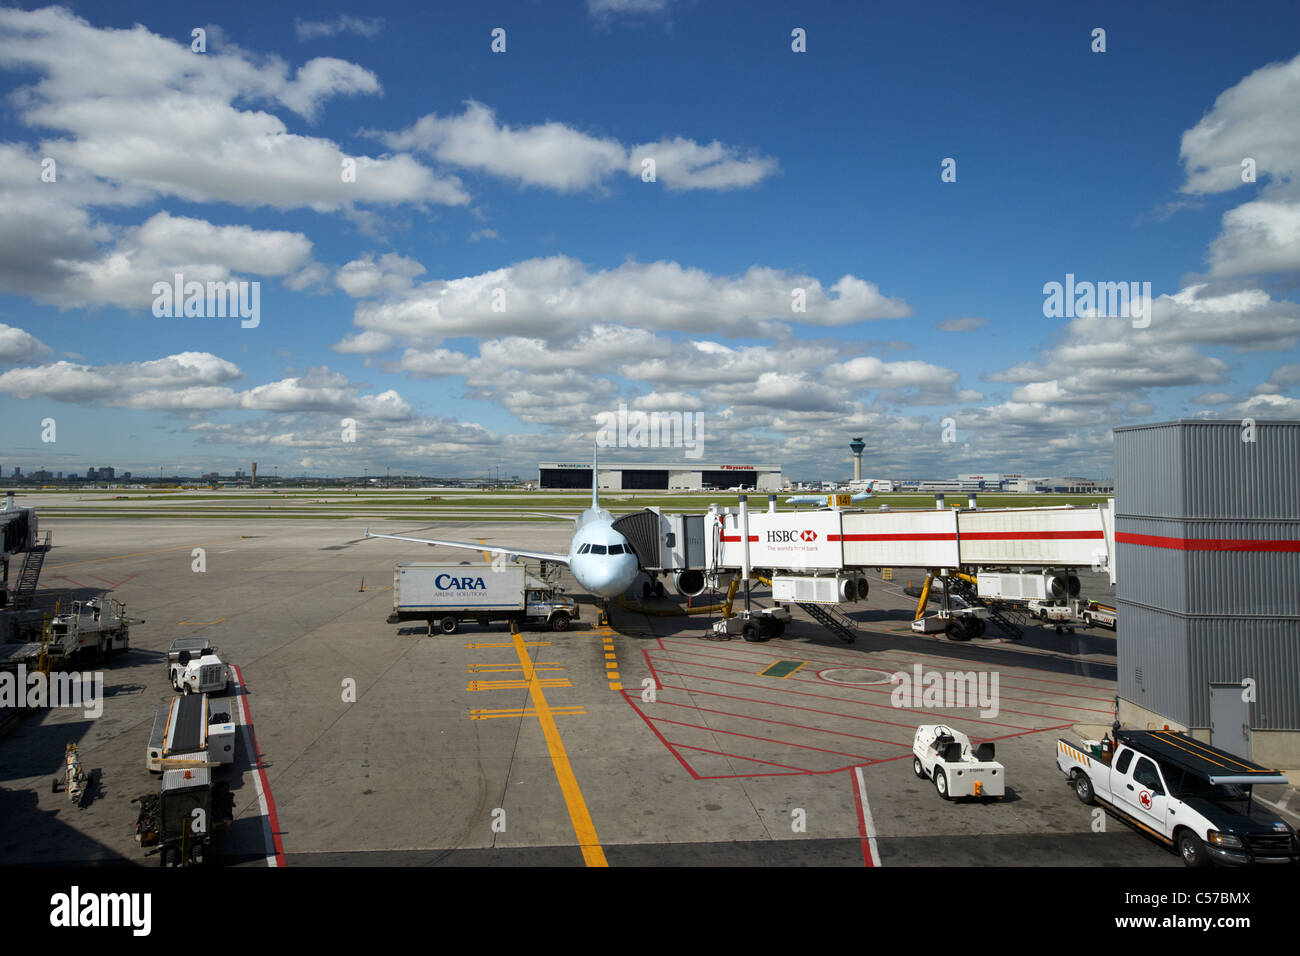 air canada aircraft and airport vehicles Toronto Pearson International Airport Ontario Canada Stock Photo